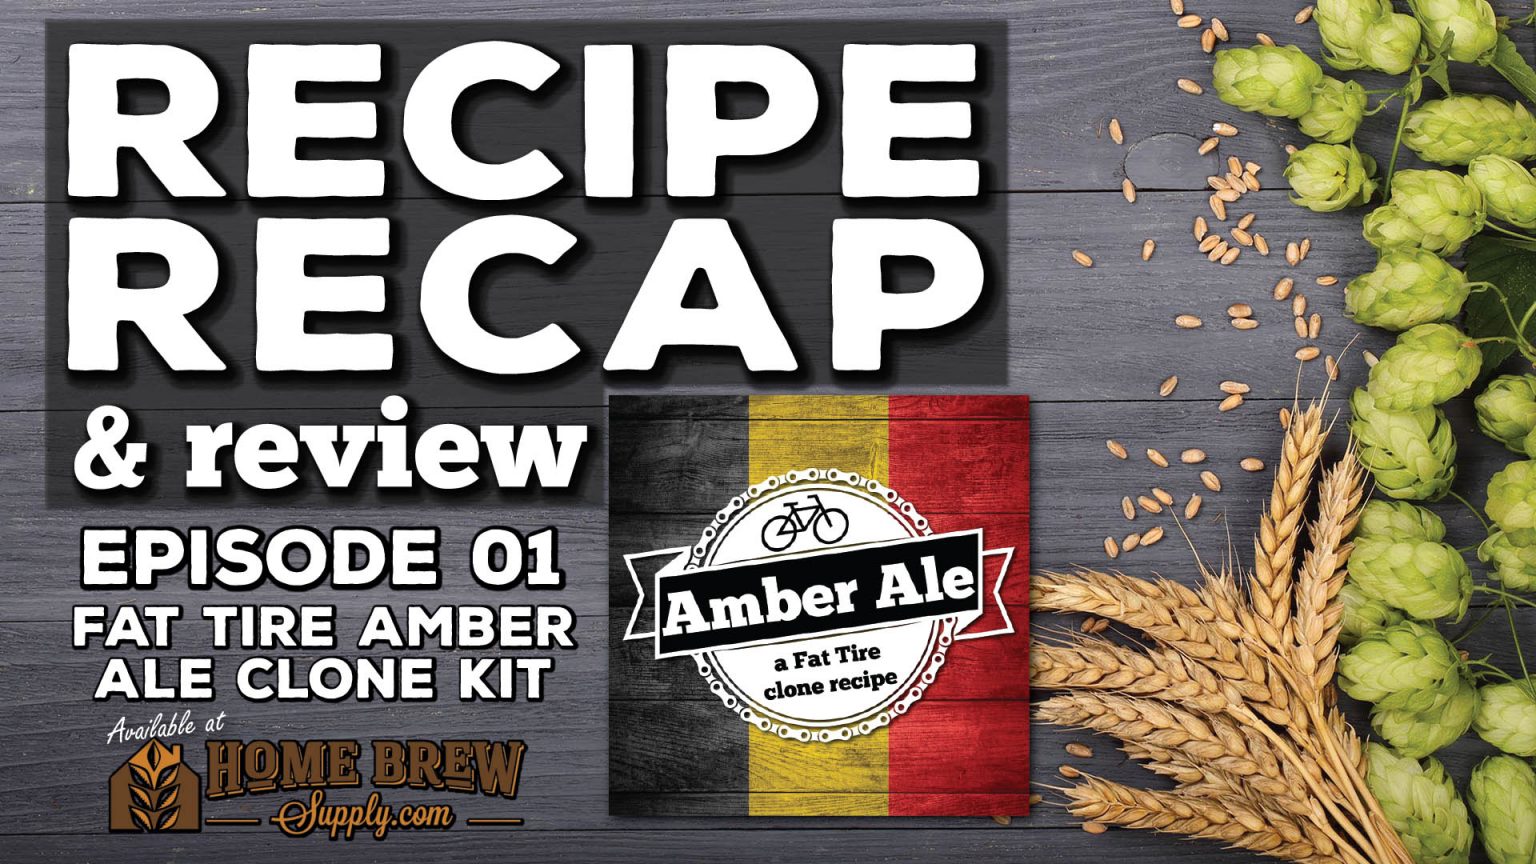 Recipe Recap & Review Ep. 01 Fat Tire Amber Ale Clone Kit Homebrew